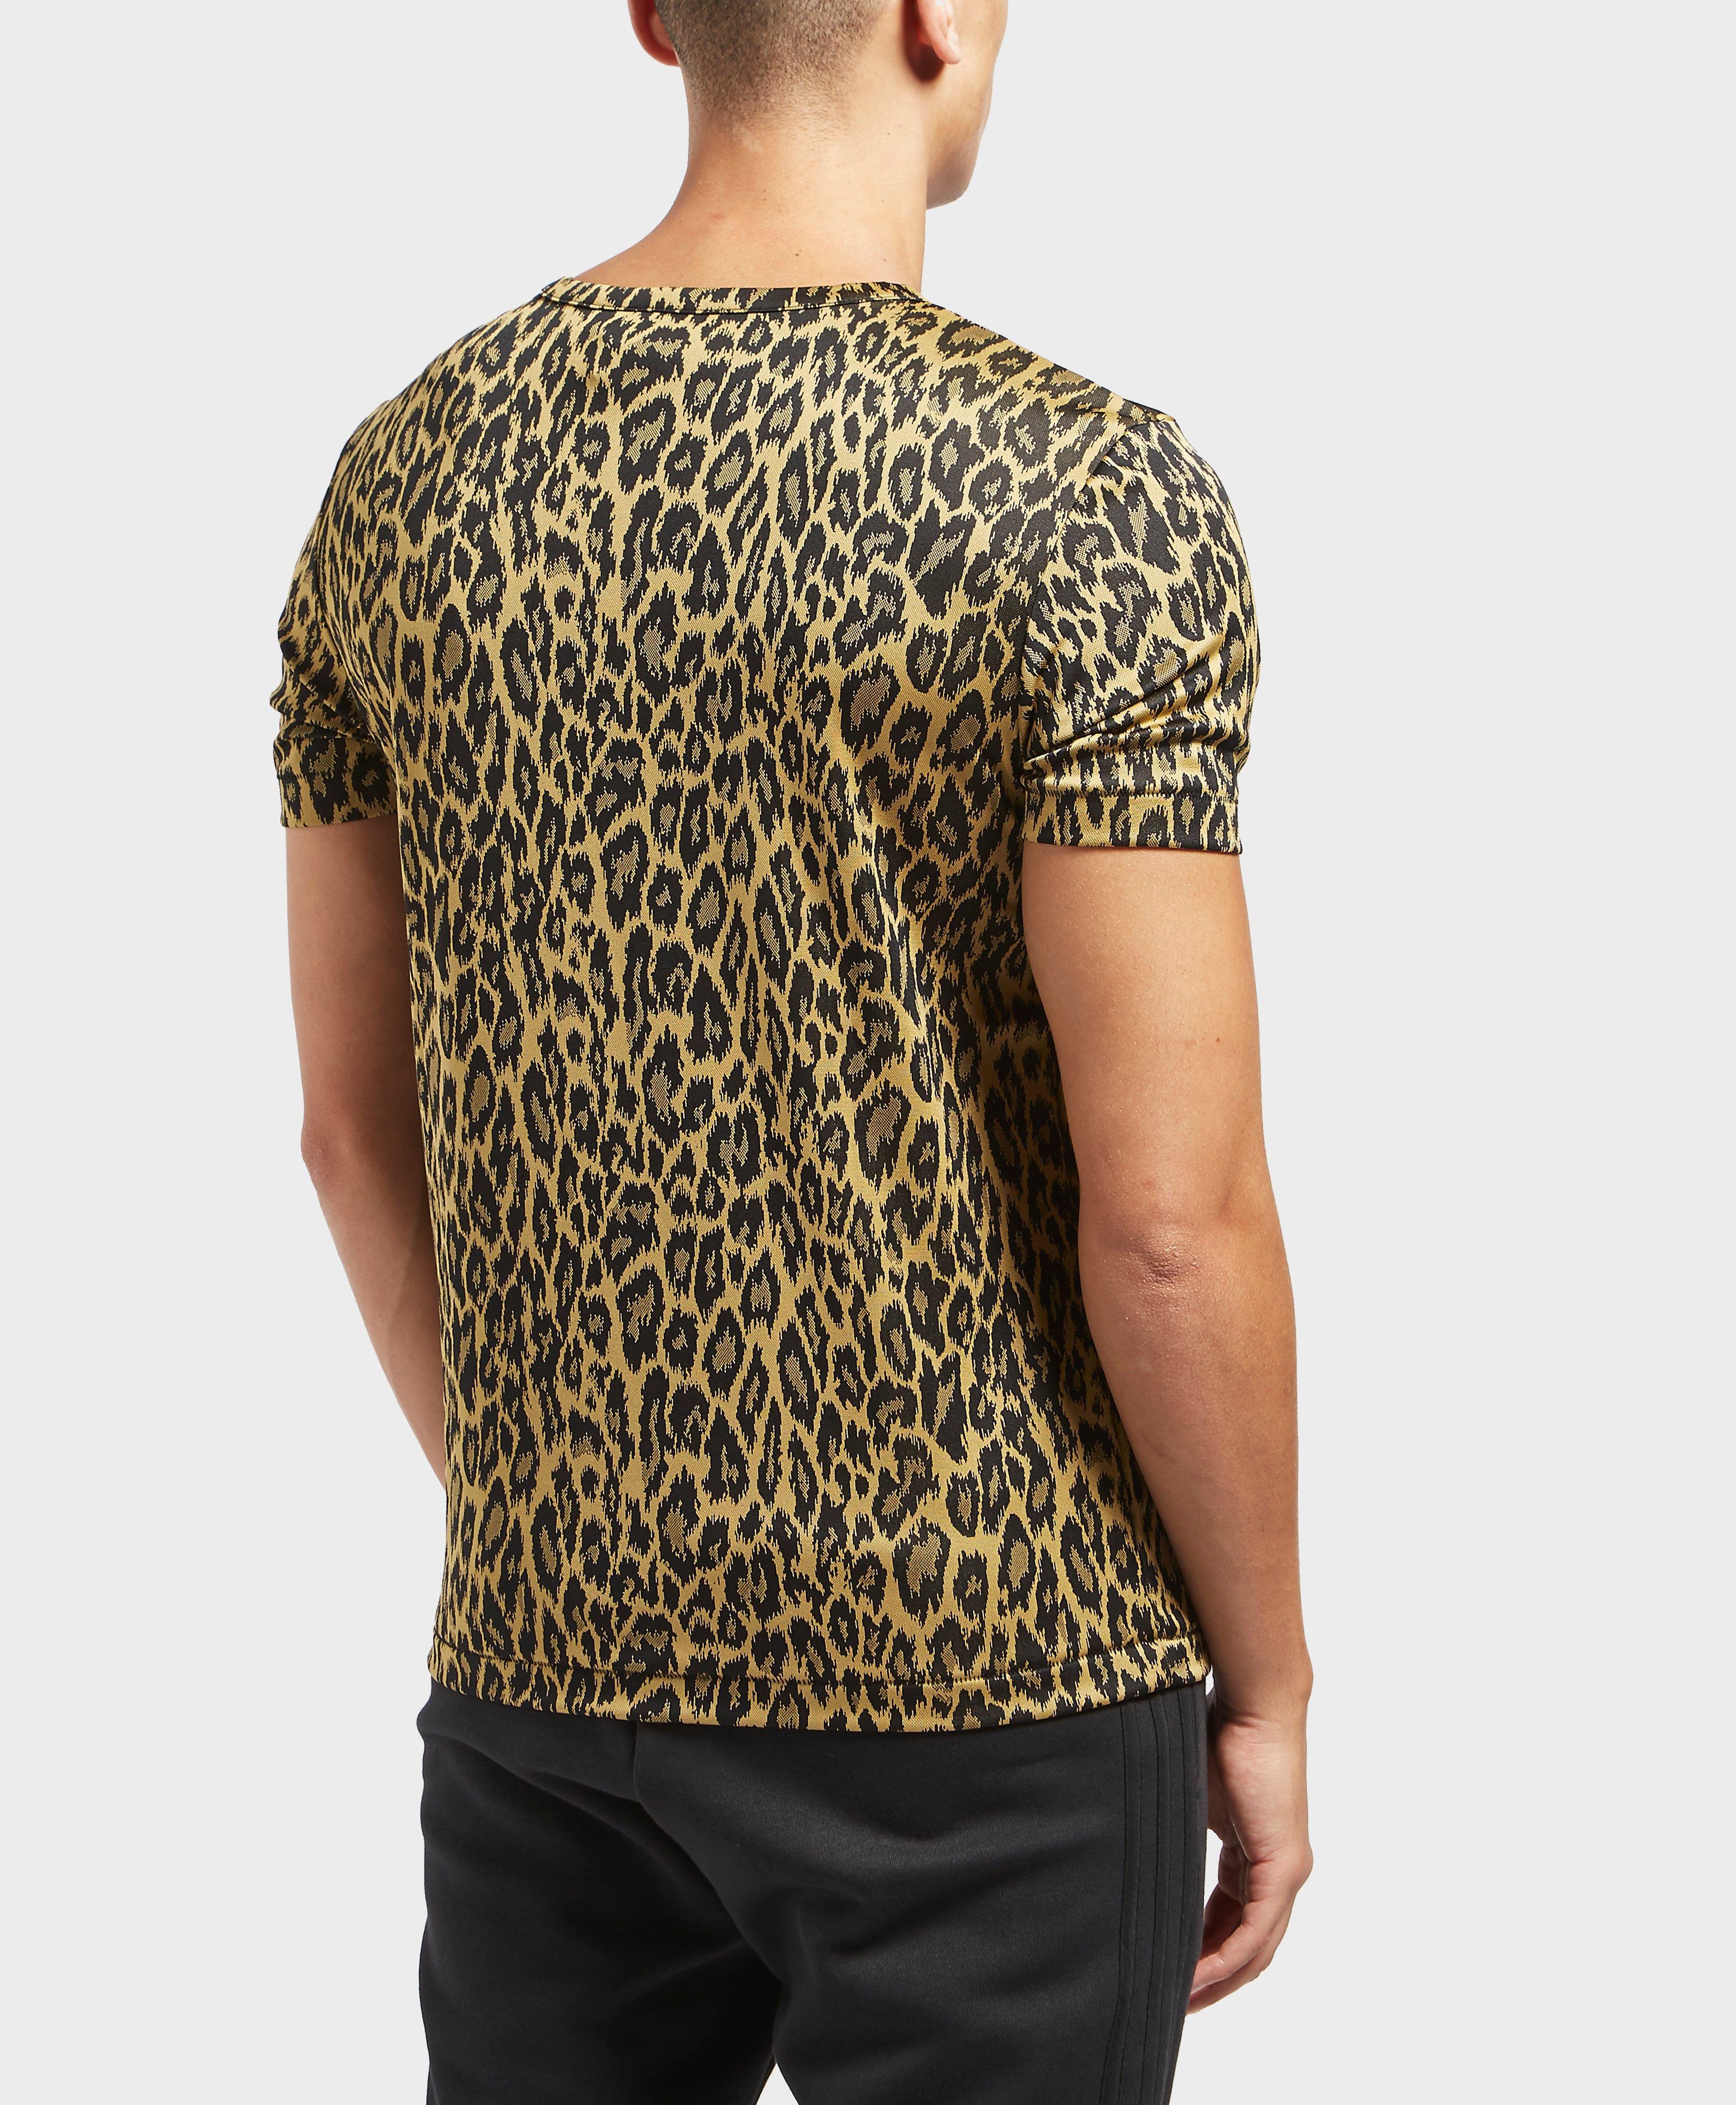 adidas Originals Nmd Leopard Short Sleeve T-shirt for Men - Lyst